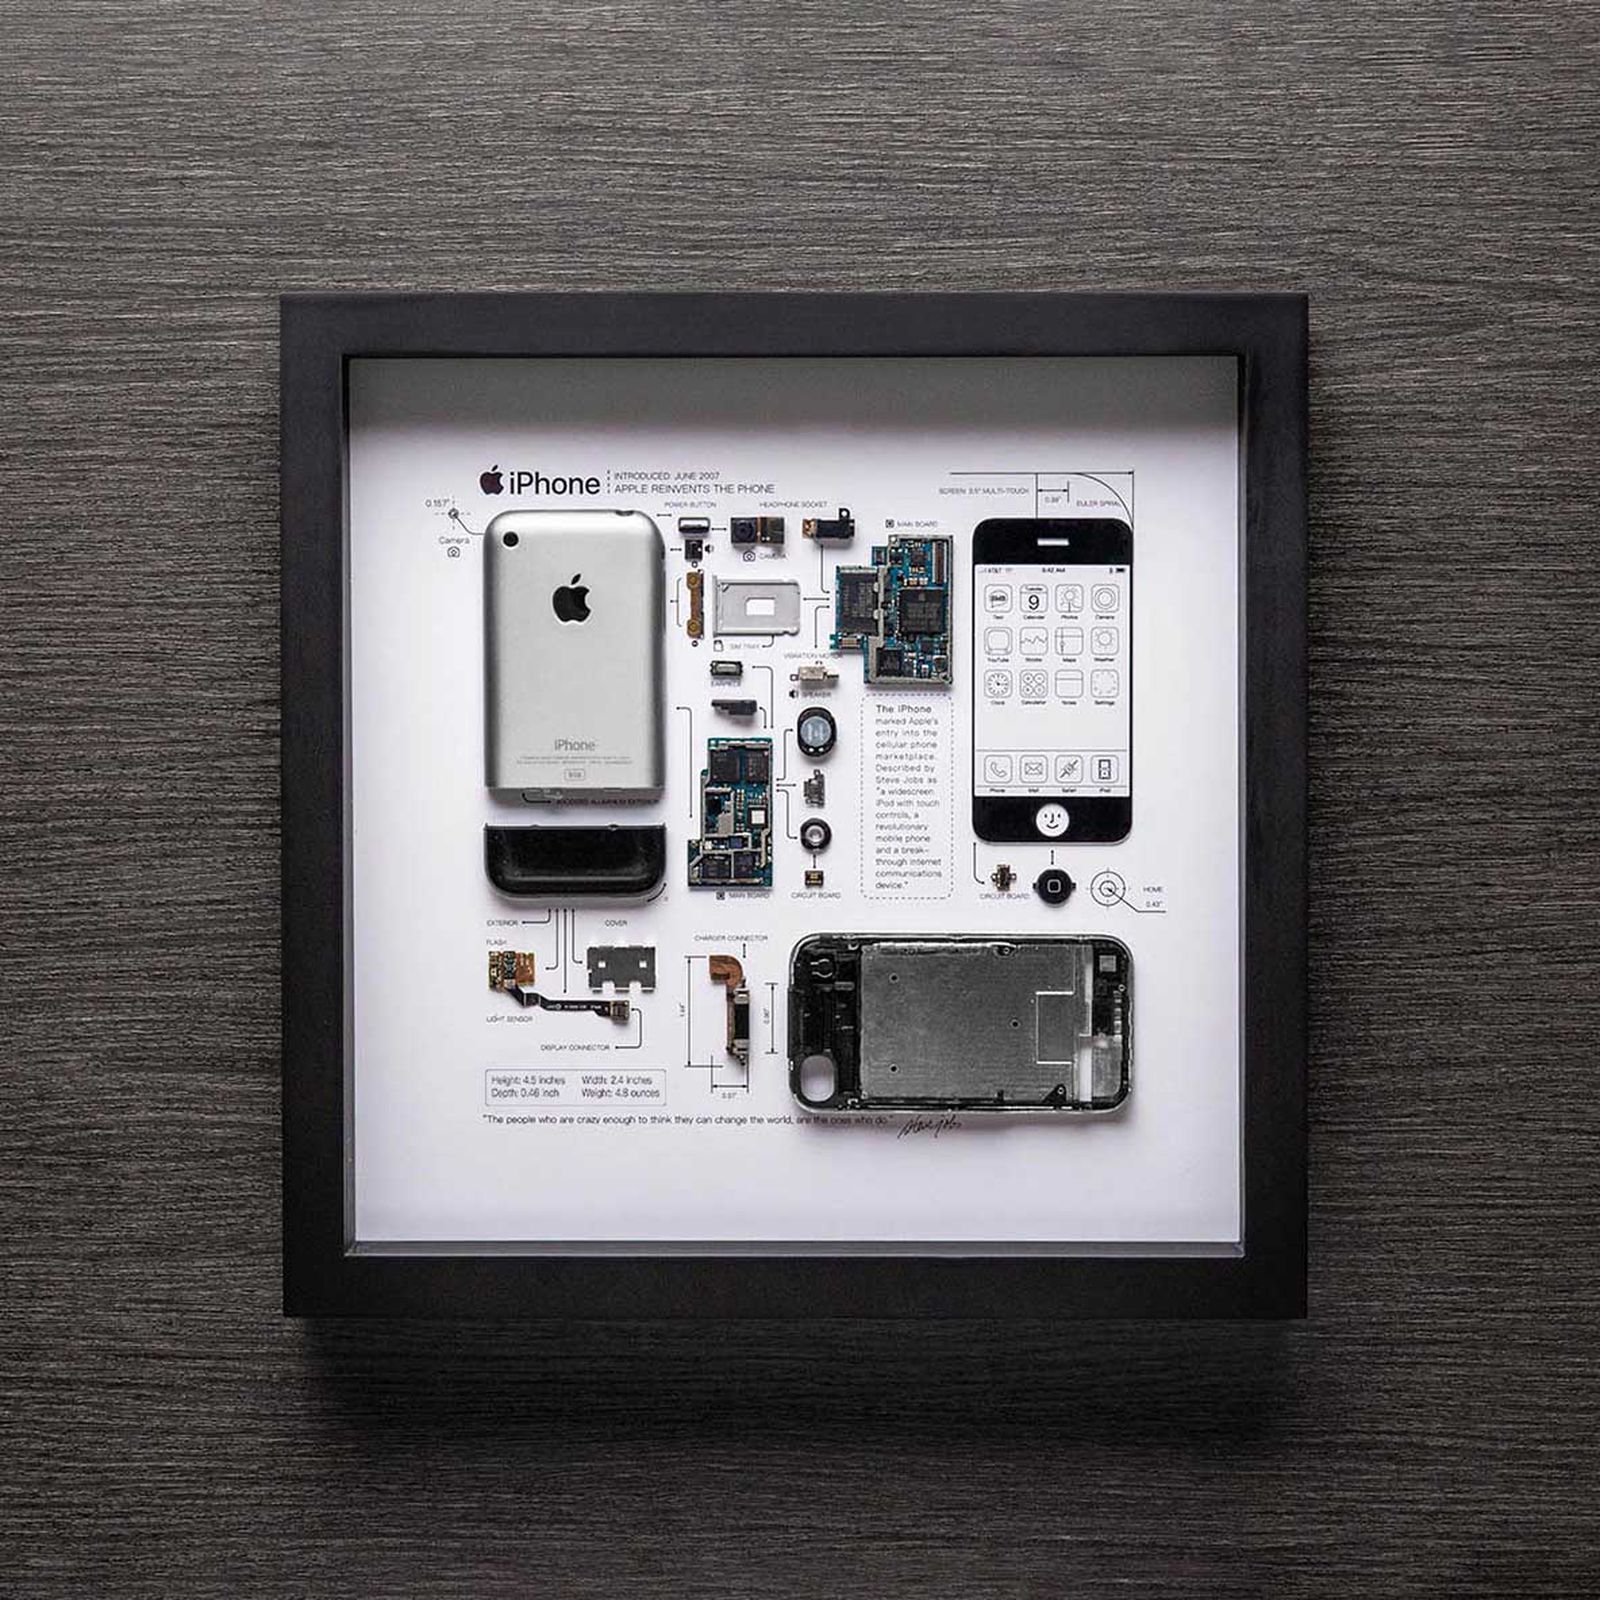 MacRumors Giveaway: Win a Deconstructed Apple Gadget From GRID Studio